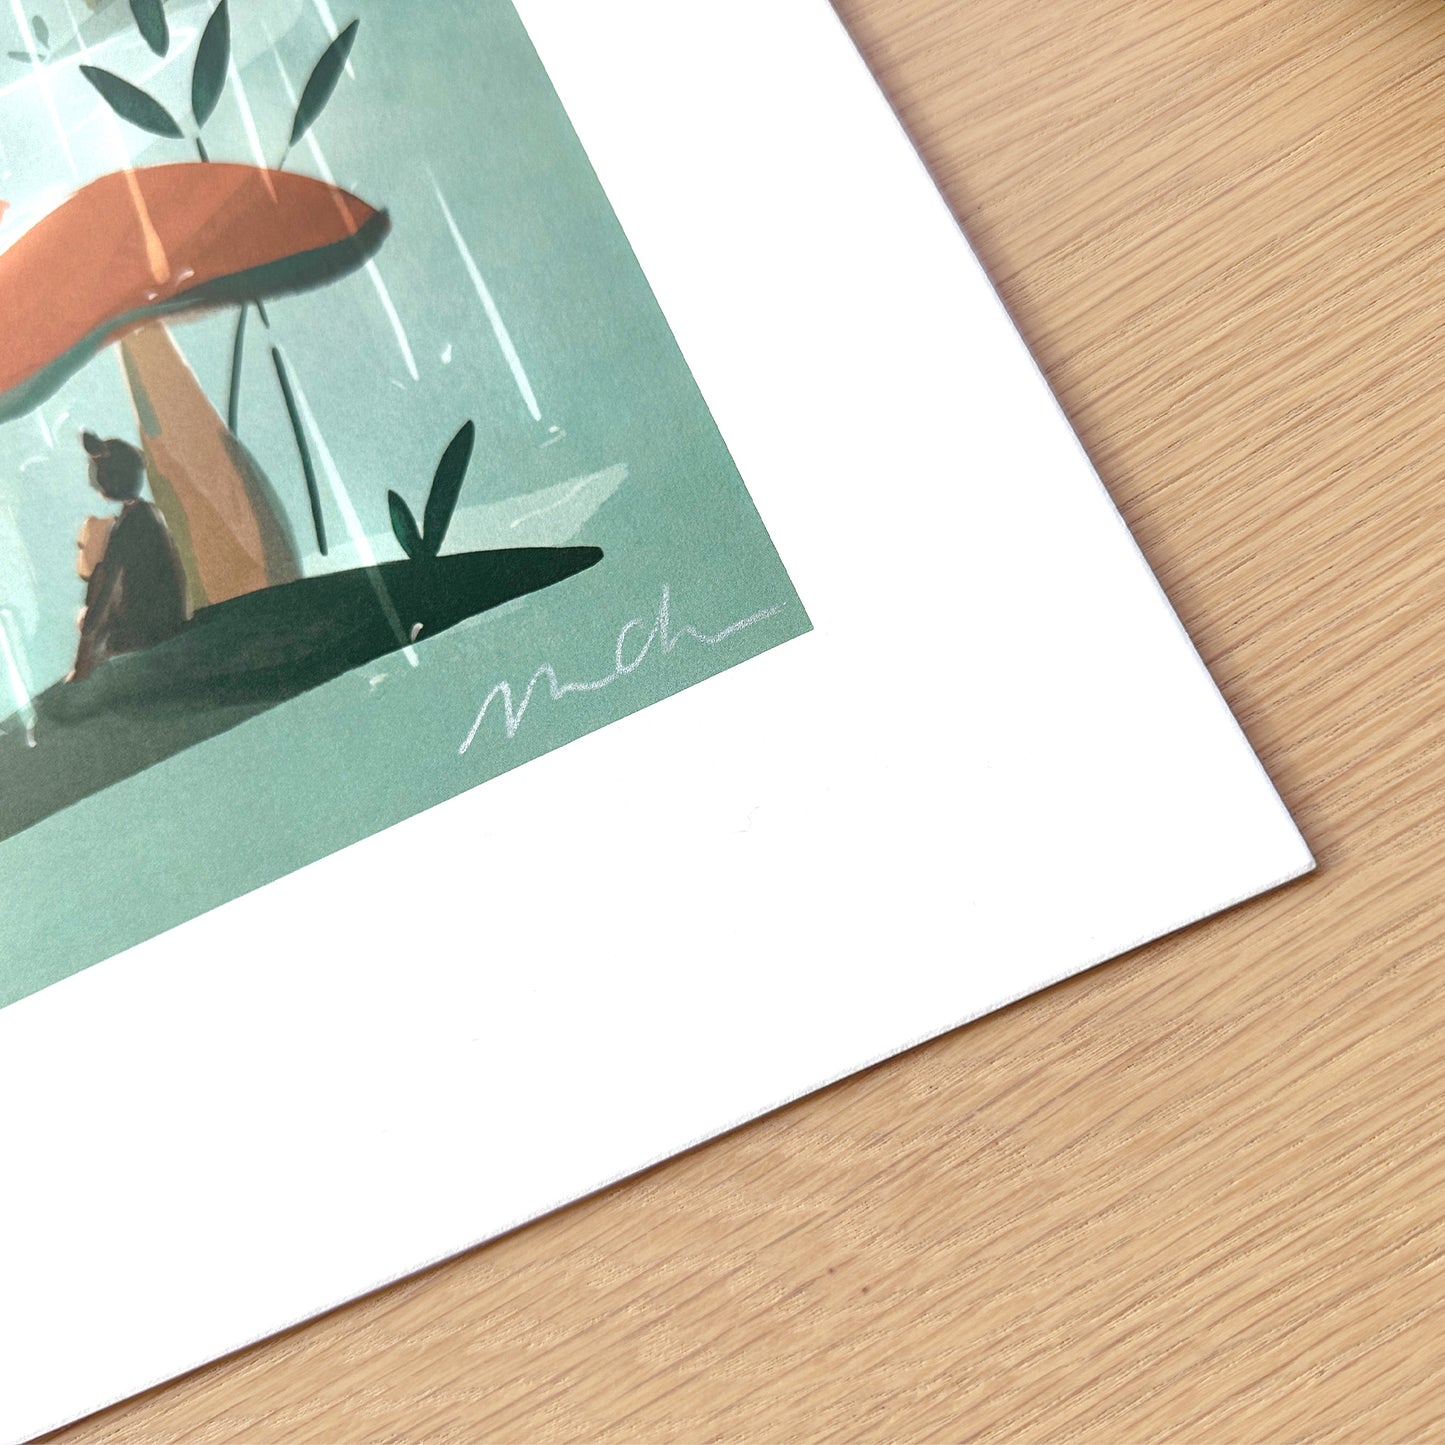 The Rain | Signed Art Print